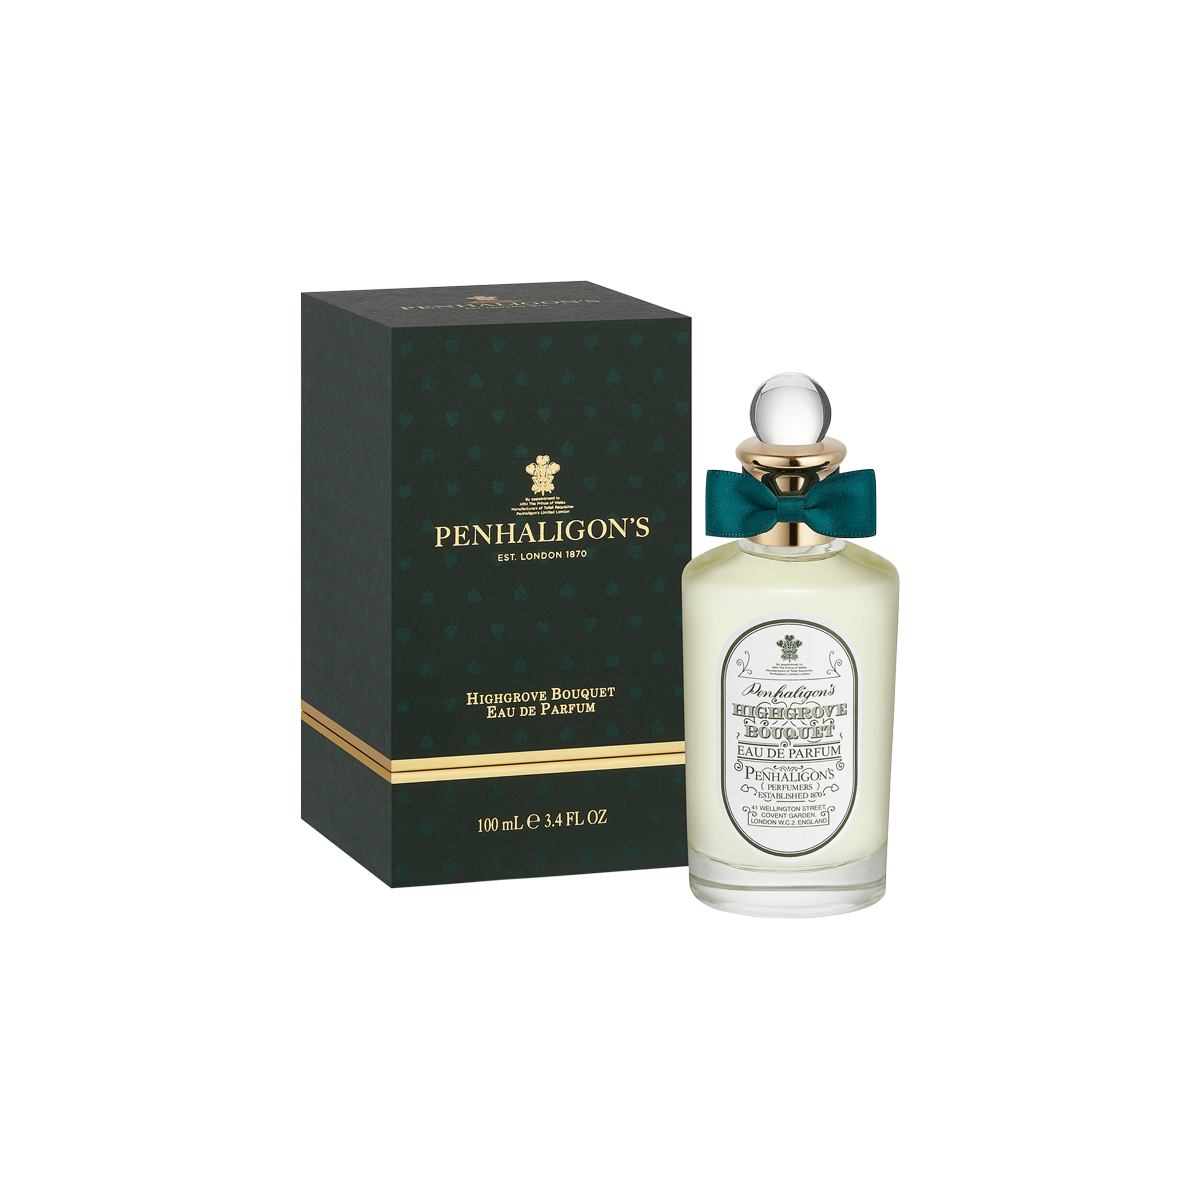 Penhaligon's - Highgrove Bouquet Eau de Parfum